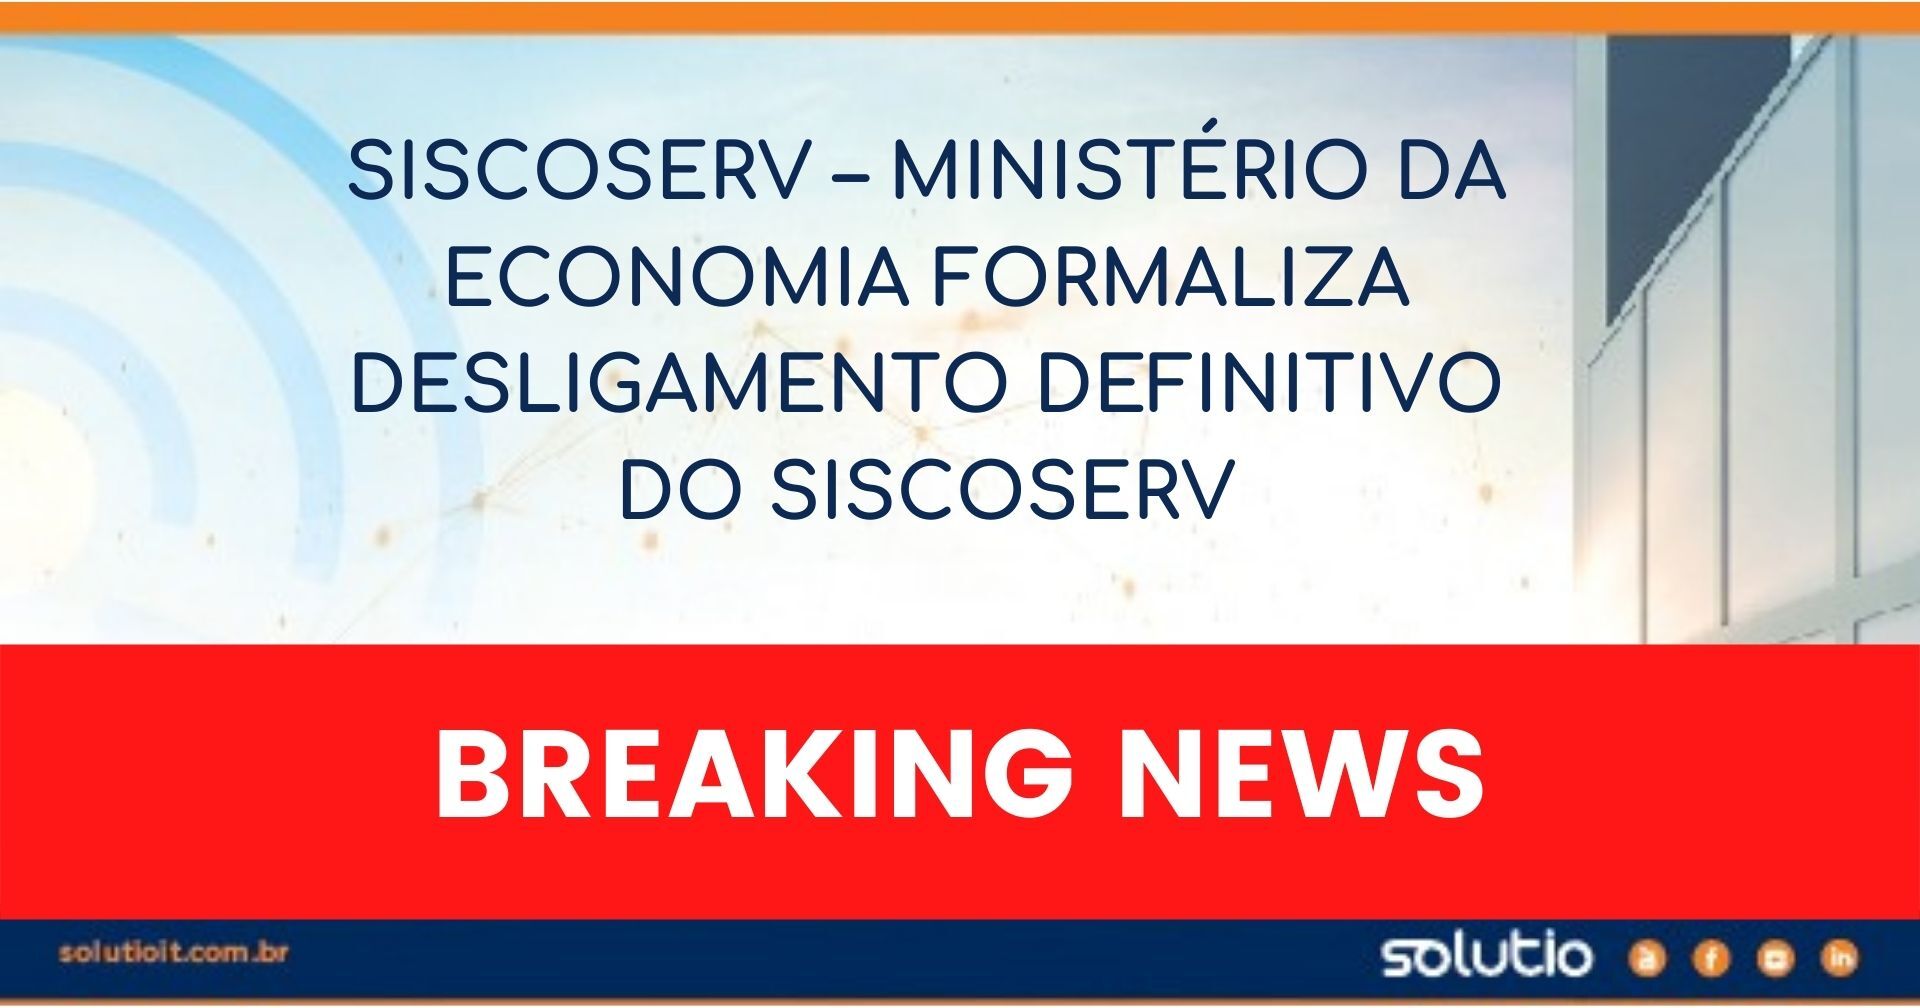 Siscoserv – Ministério da Economia formaliza desligamento definitivo do Siscoserv